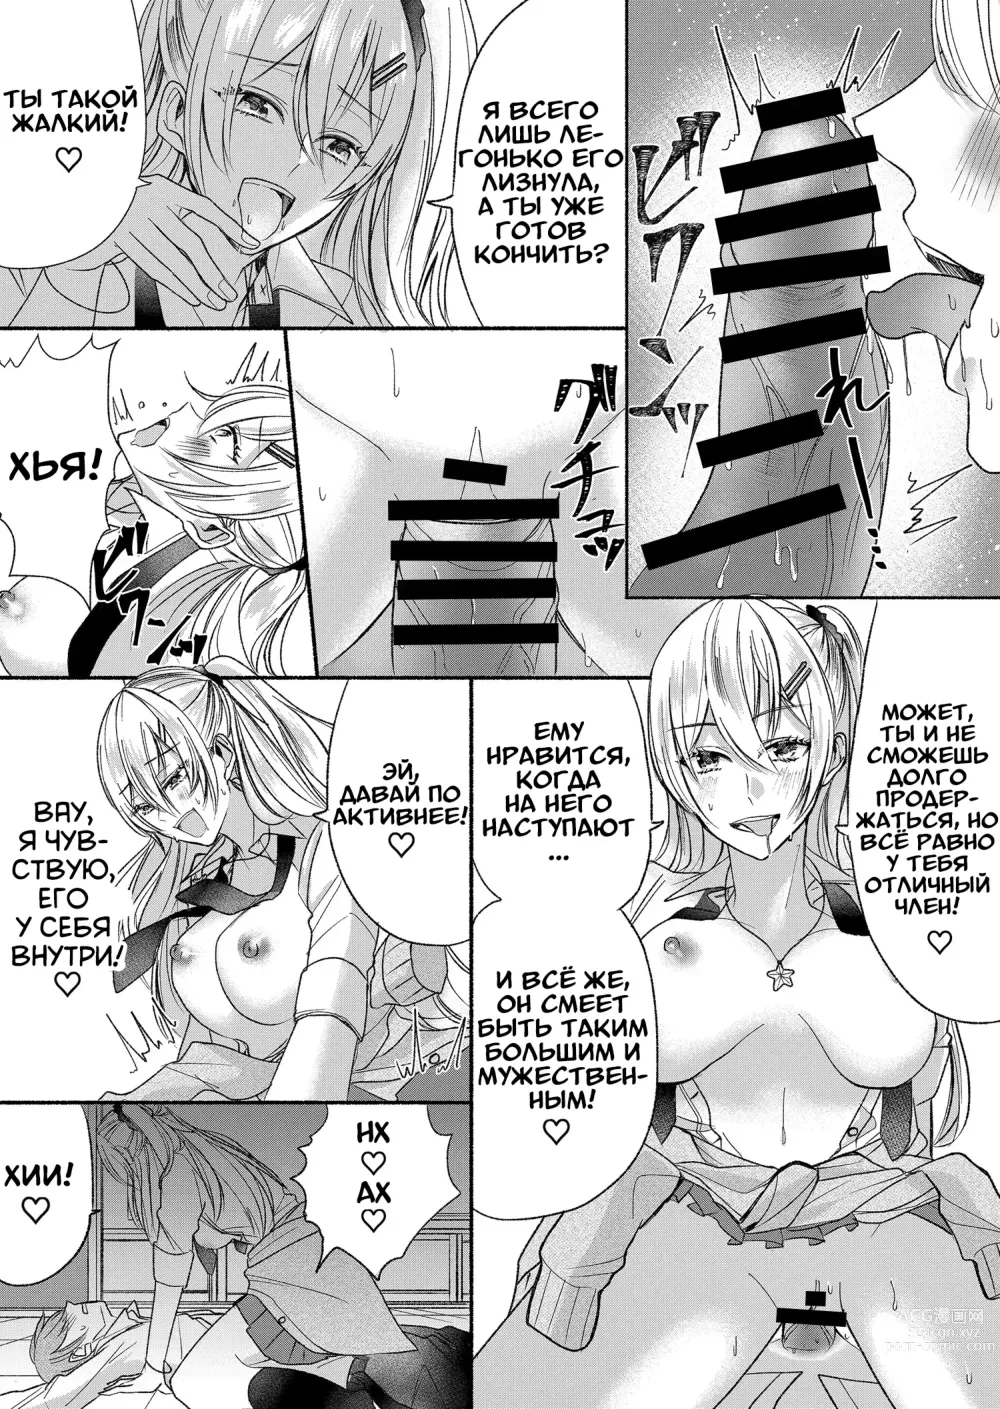 Page 13 of doujinshi Суккуб, который ненавидит мужчин 2